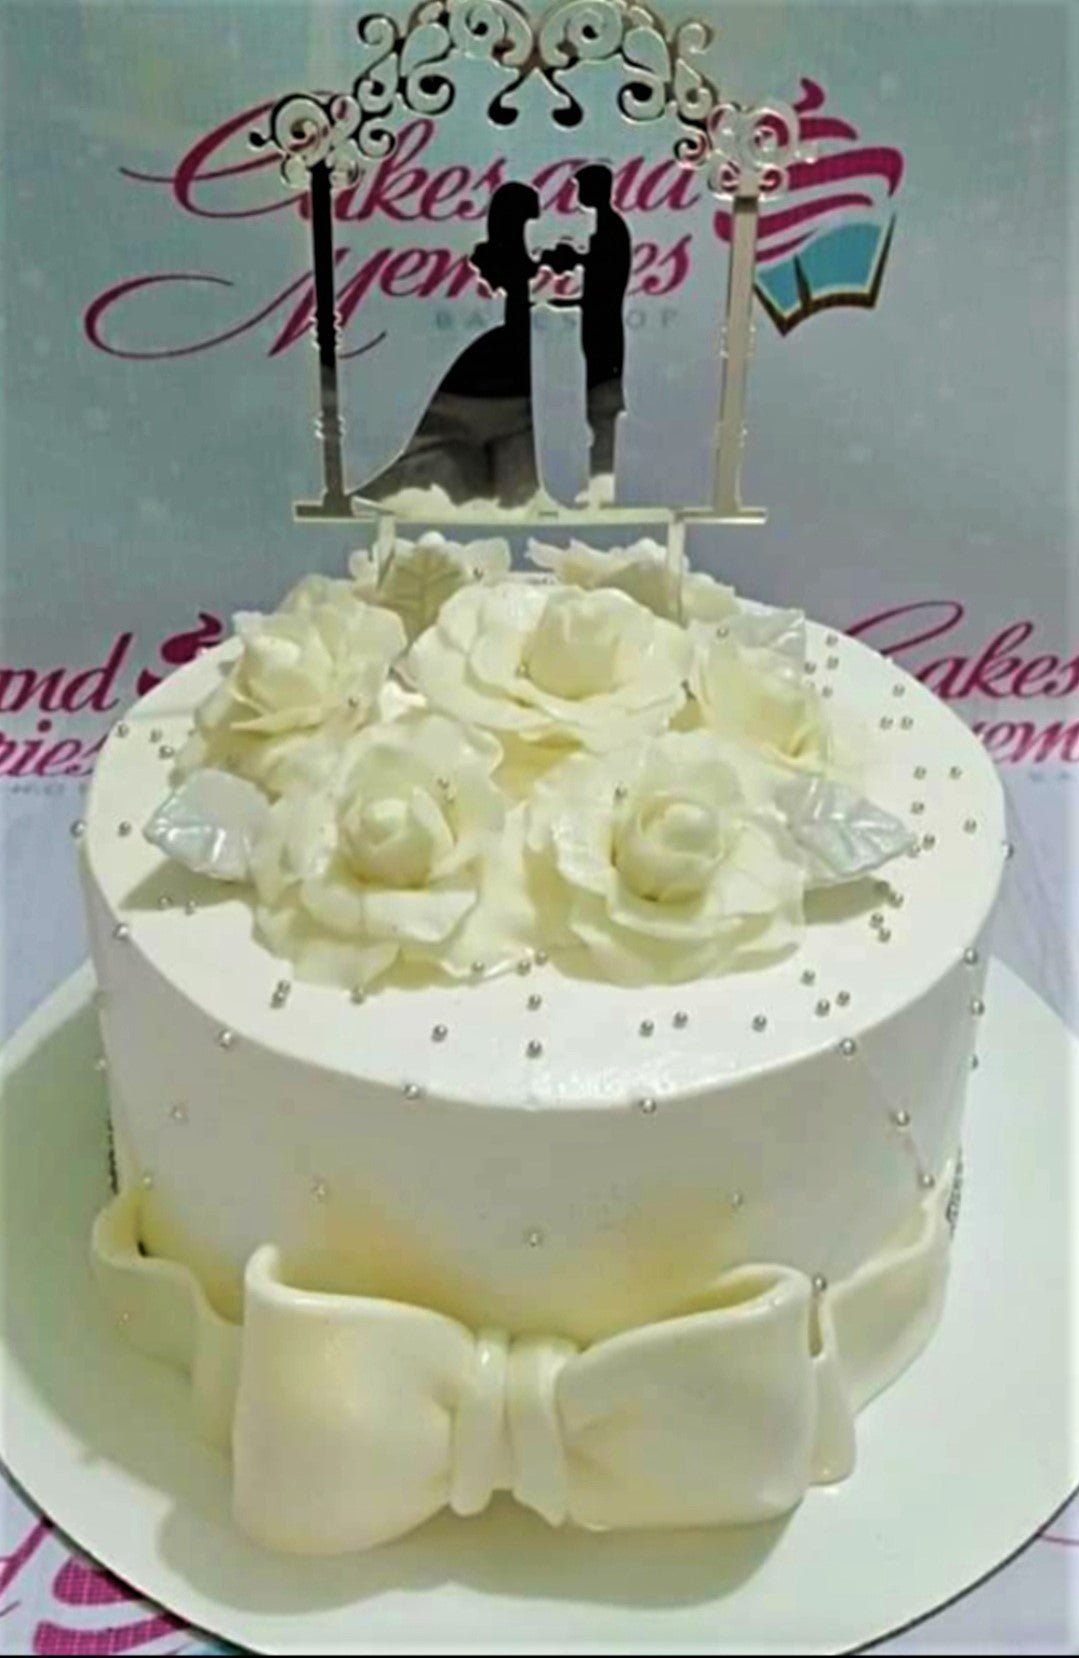 Two Tier Wedding Cake Cover Fondant Stock Photo 478747924 | Shutterstock